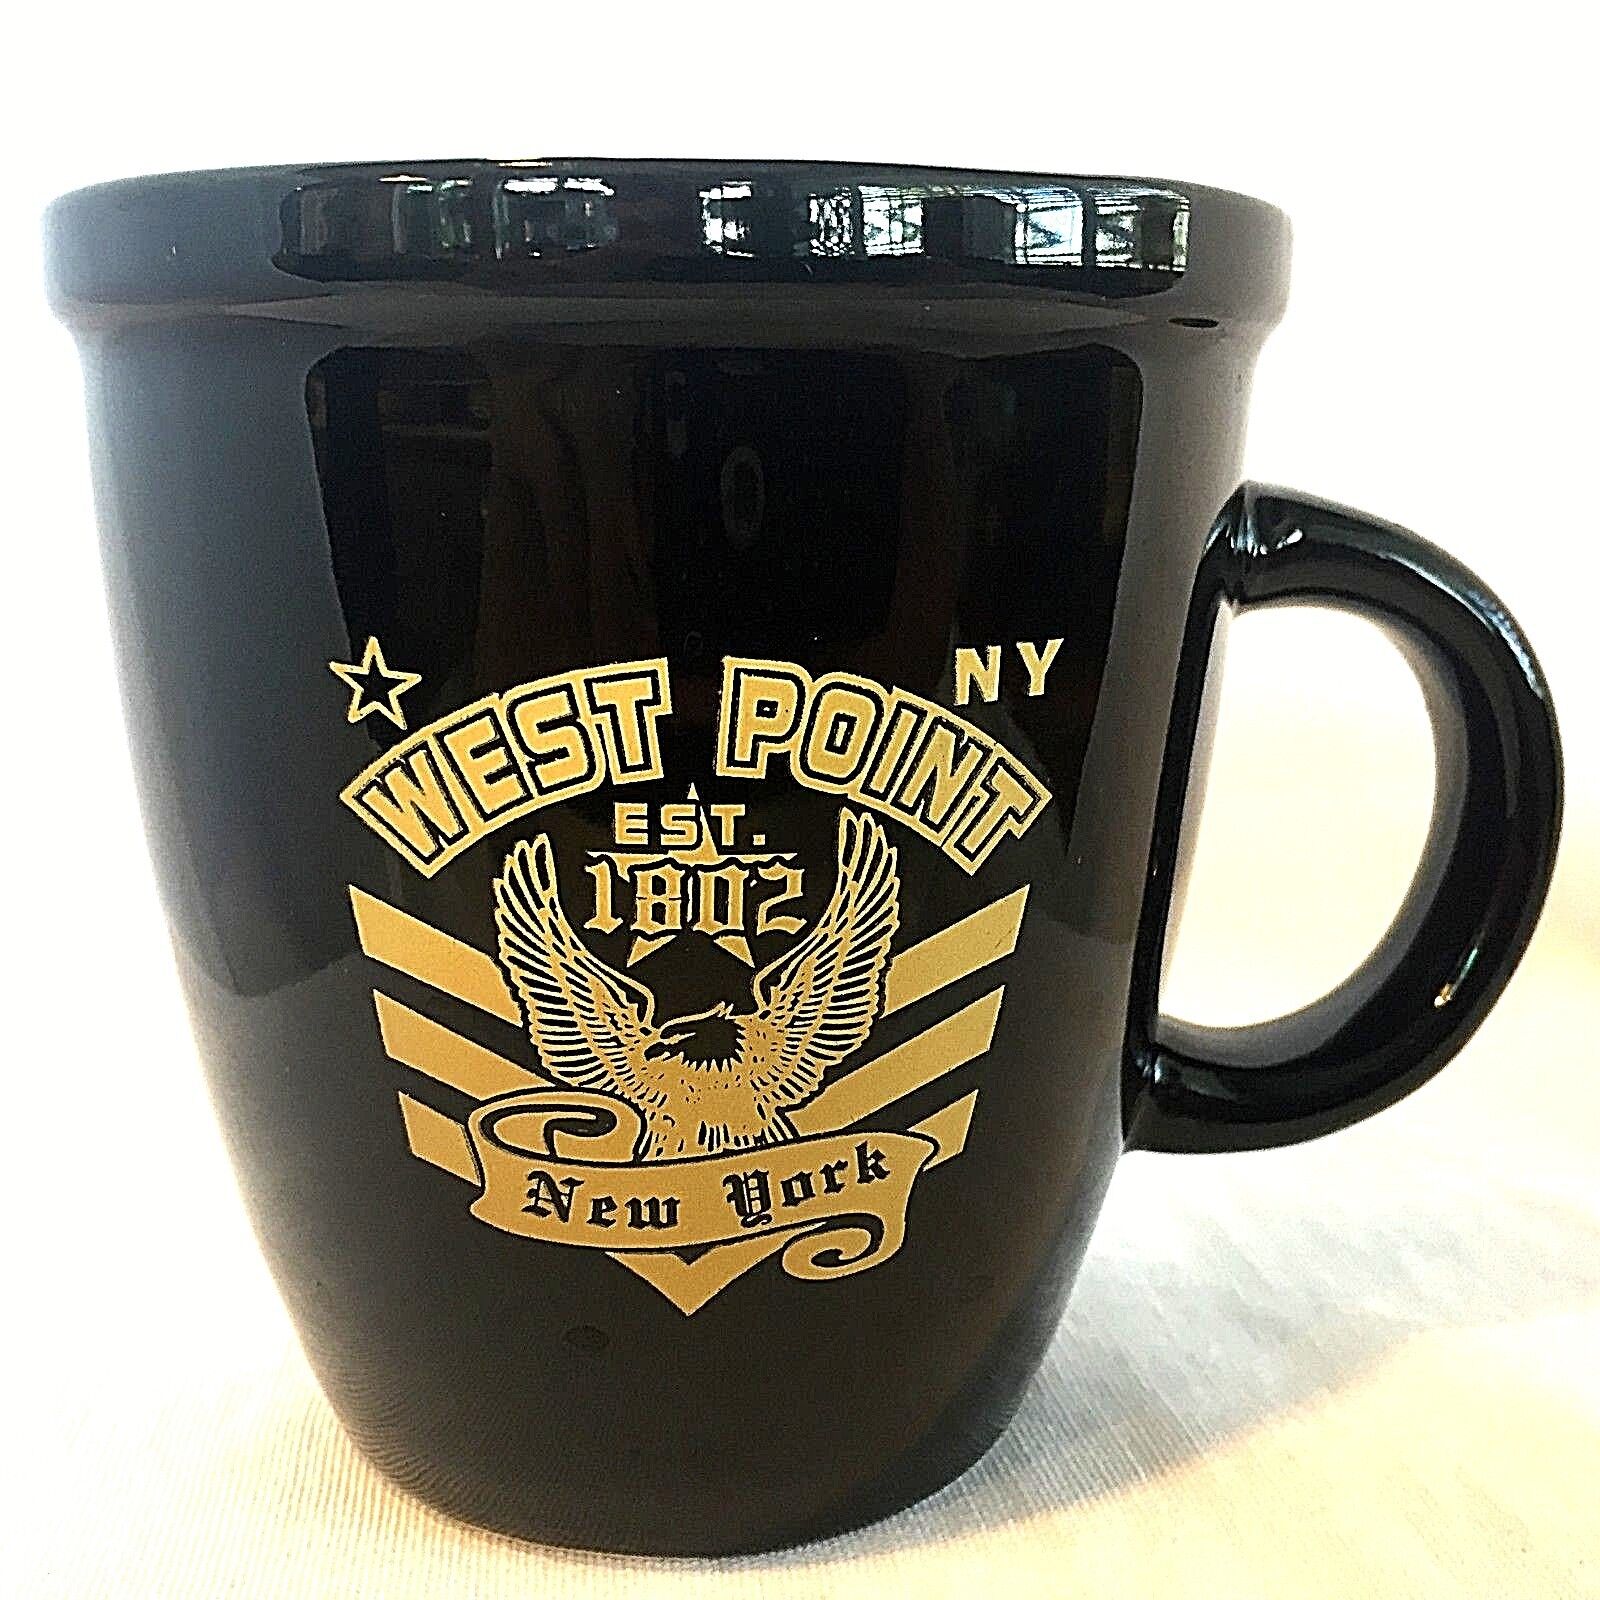 U.S. ARMY WEST POINT Coffee Mug LARGE Gold Emblem Eagle Established 1802 